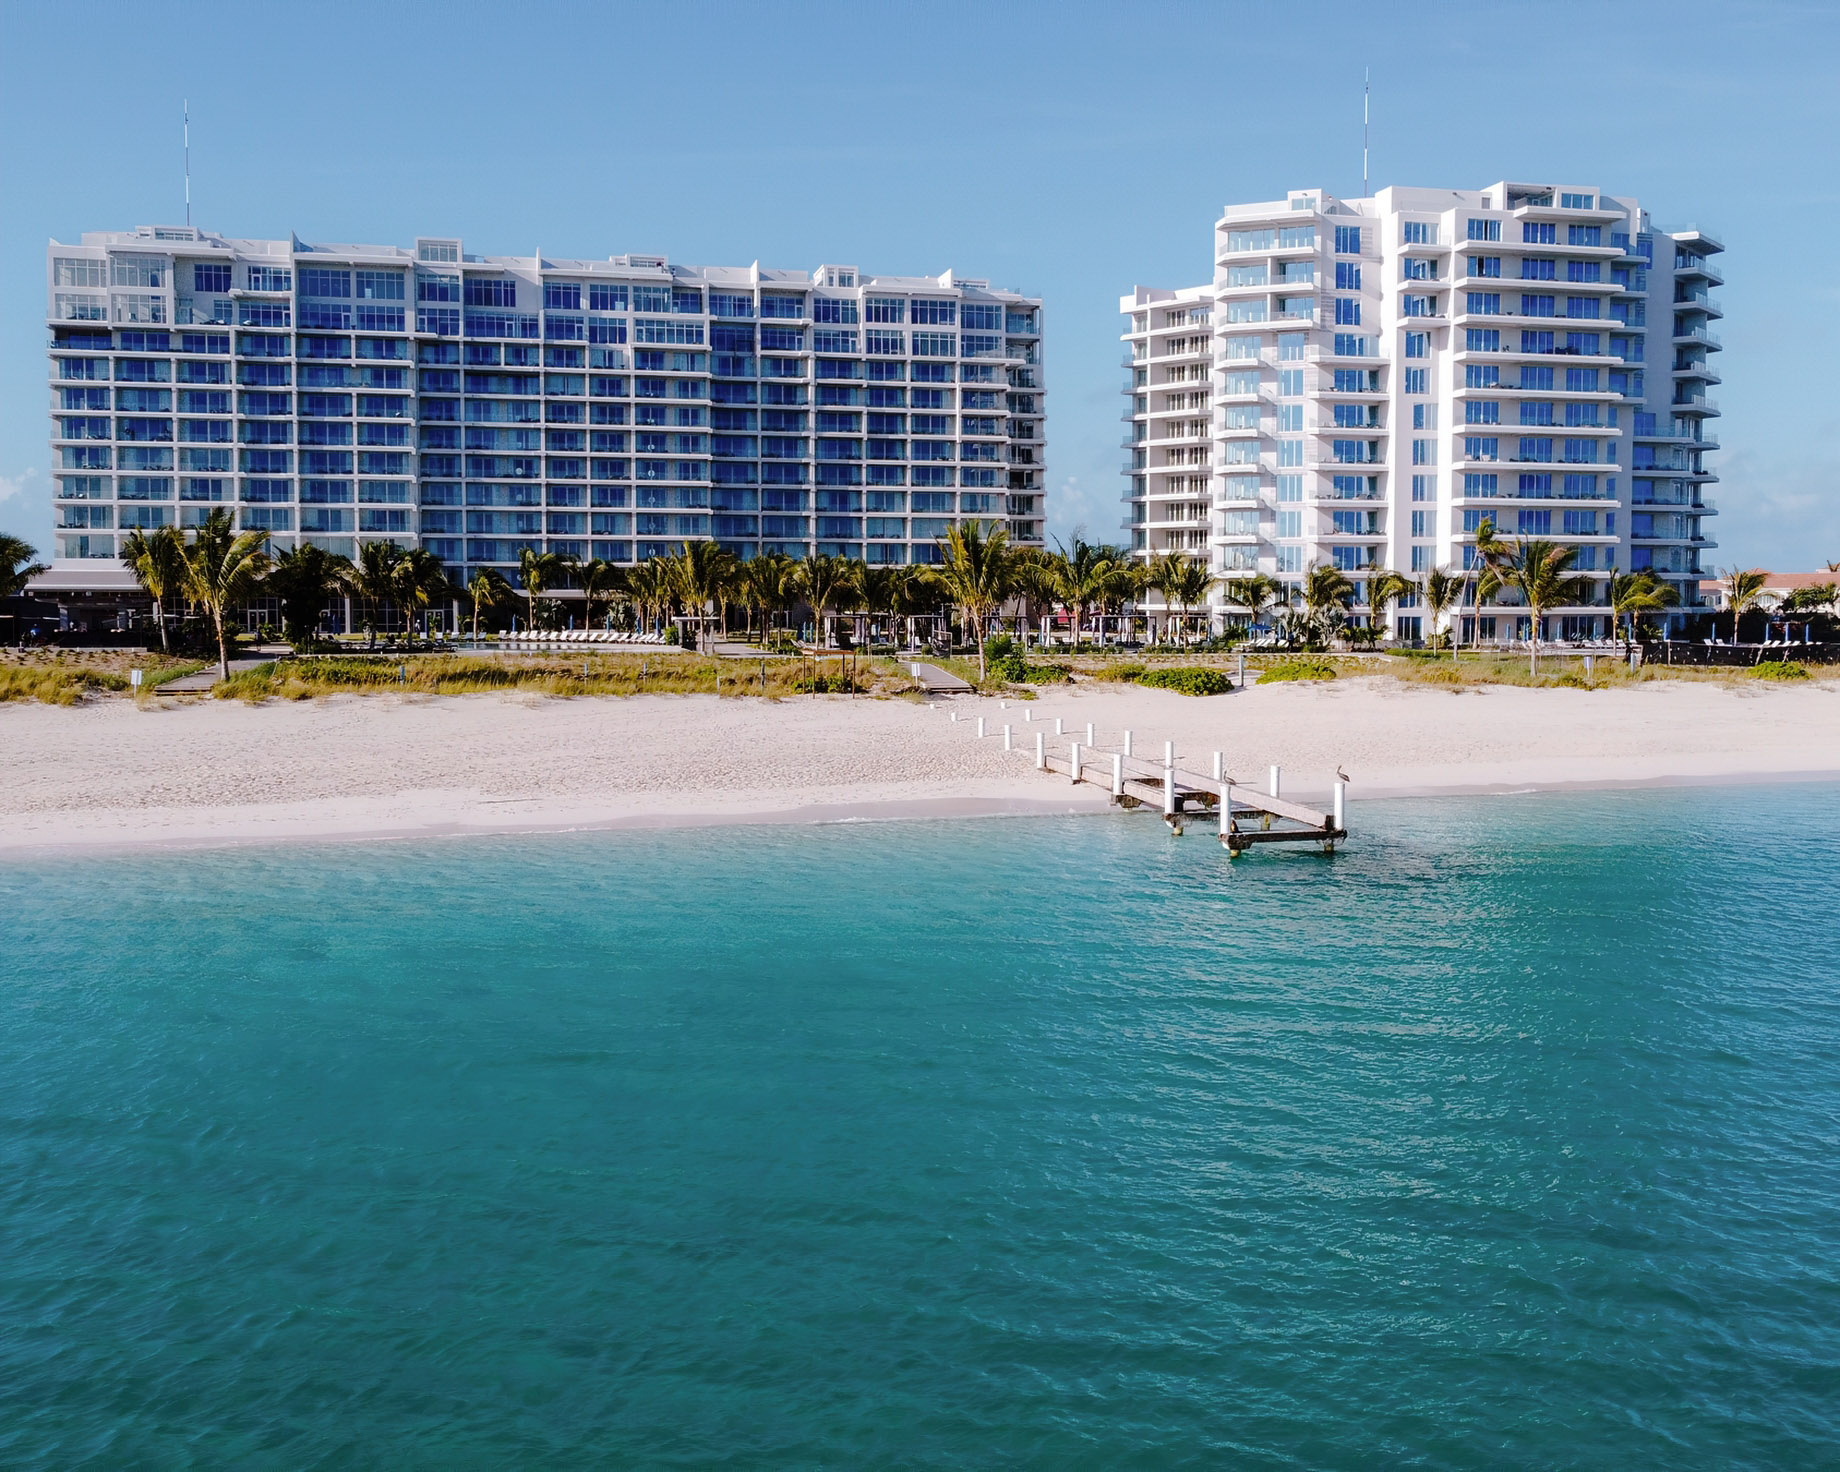 The Ritz-Carlton, Turks & Caicos Resort - Providenciales, Turks and Caicos Islands - Exterior Aerial Beach View